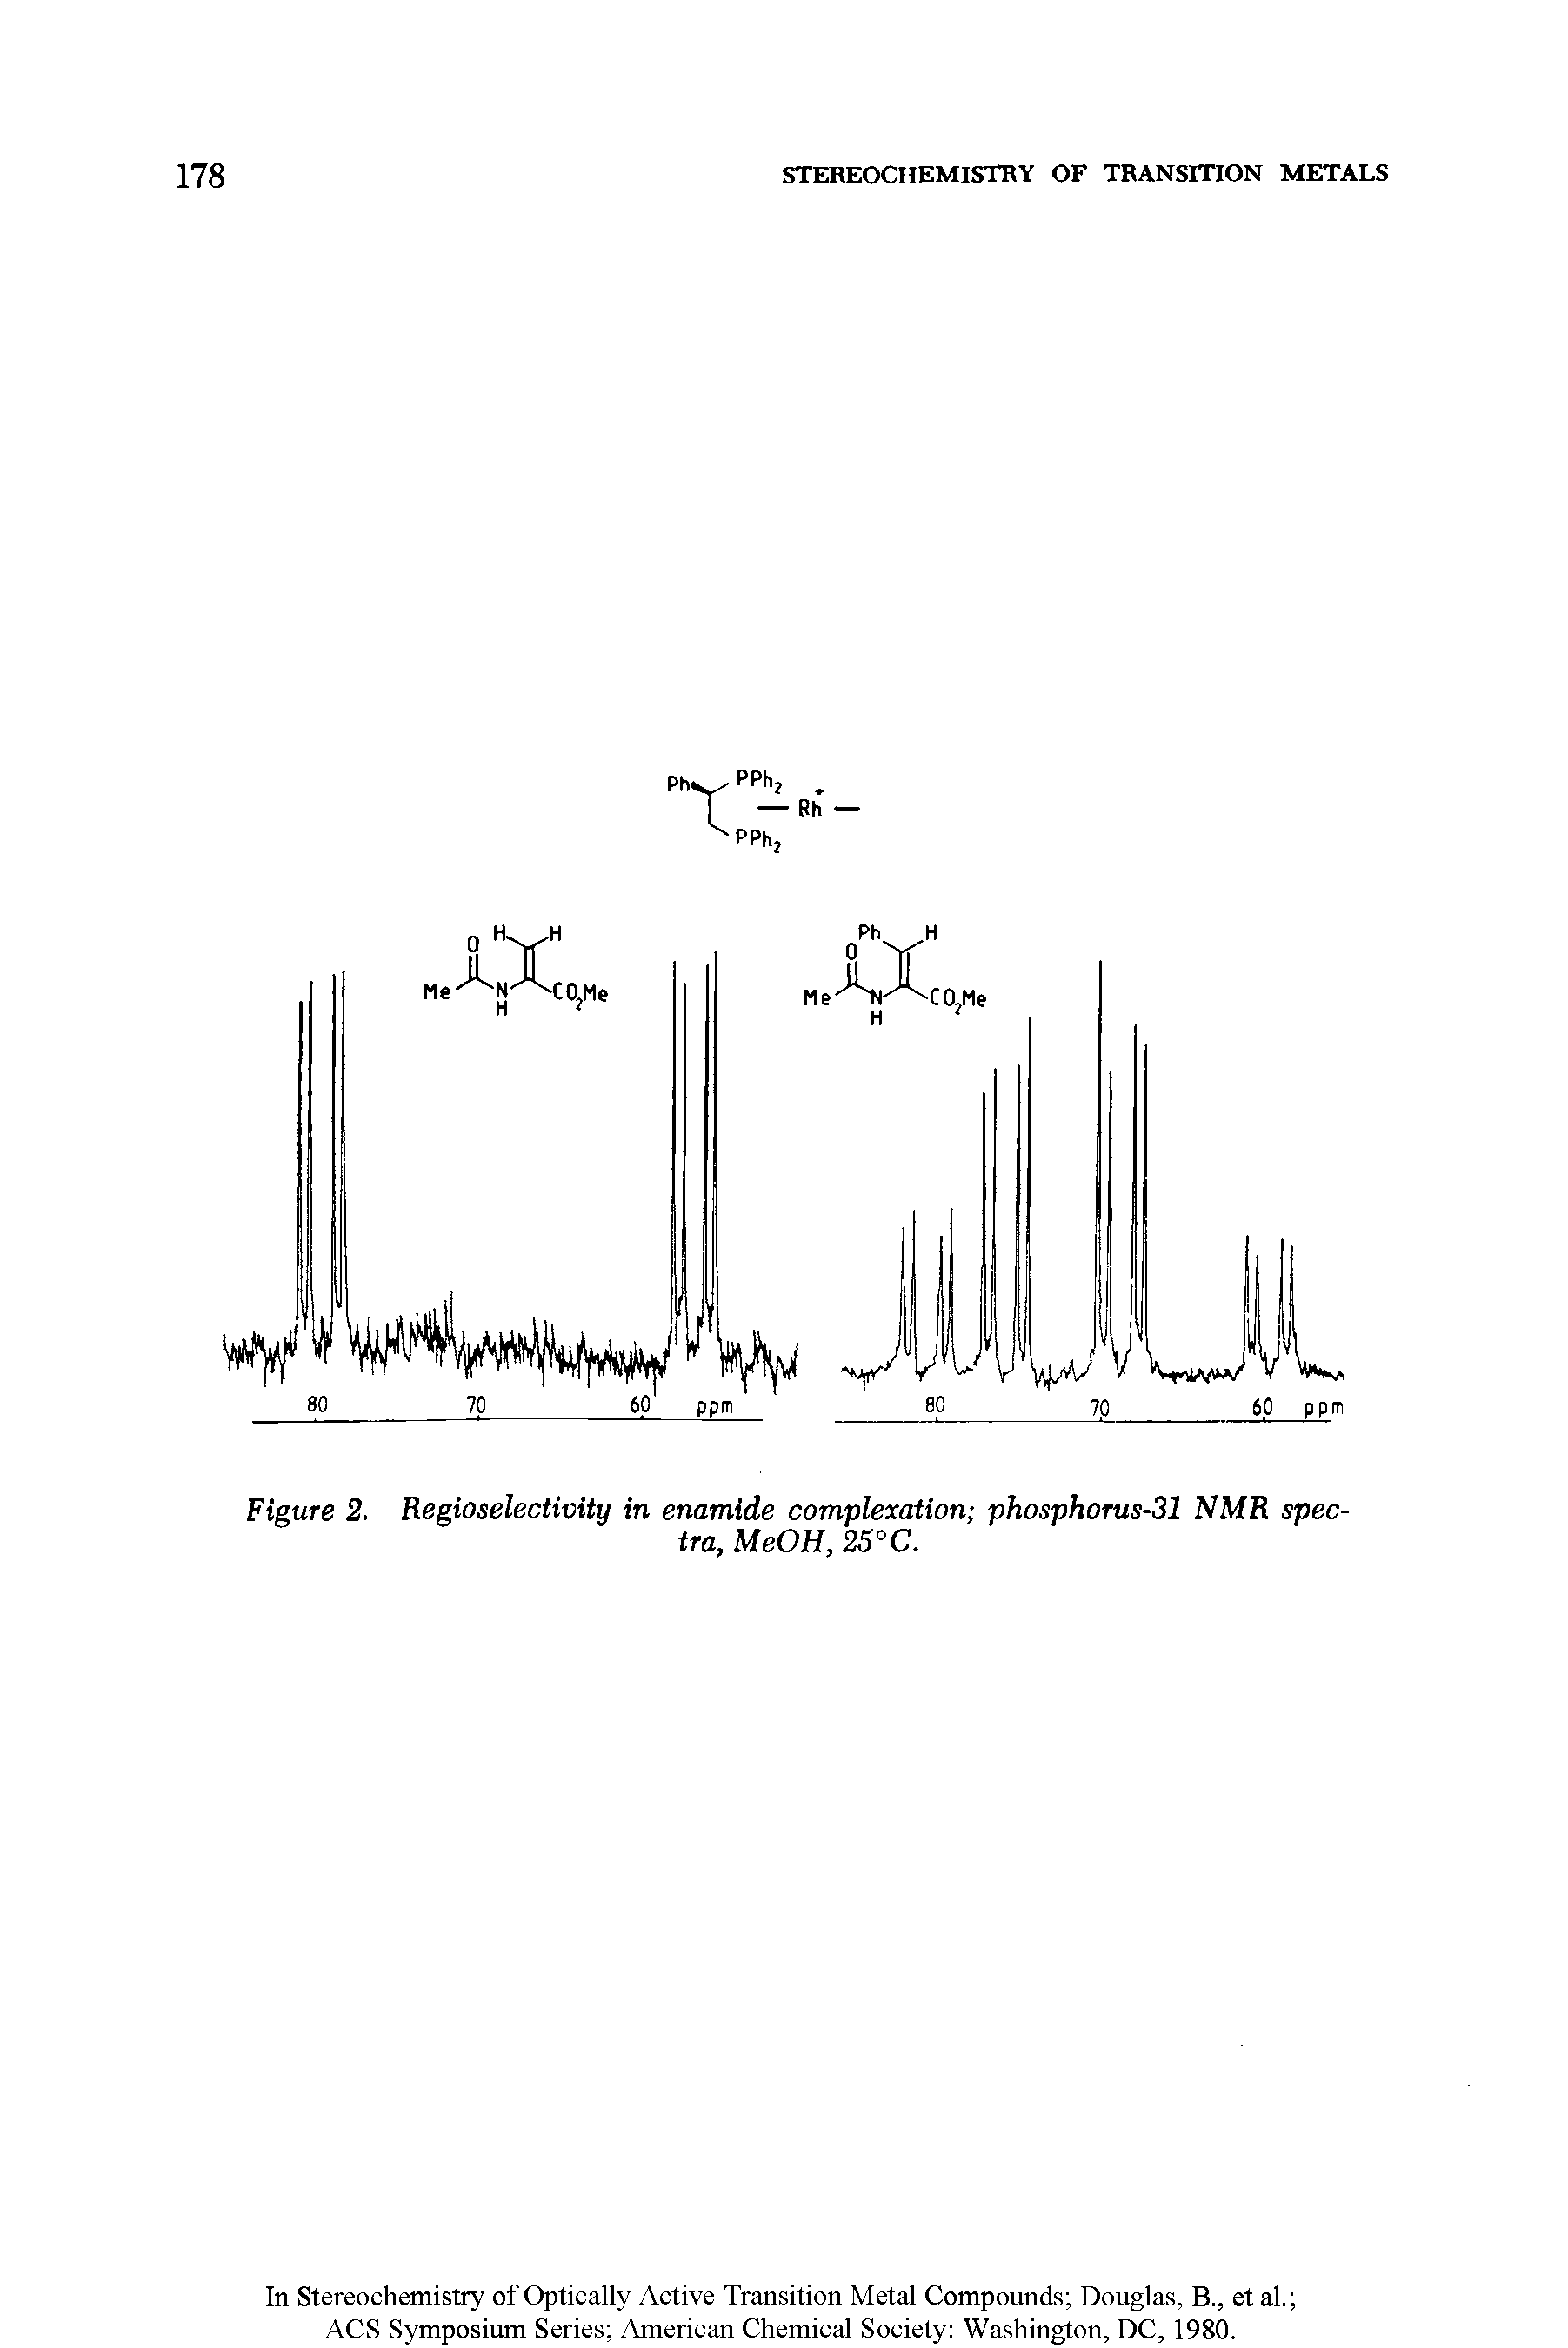 Figure 2. Regioselectivity in enamide complexation phosphorus-31 NMR spectra, MeOH, 25° C.